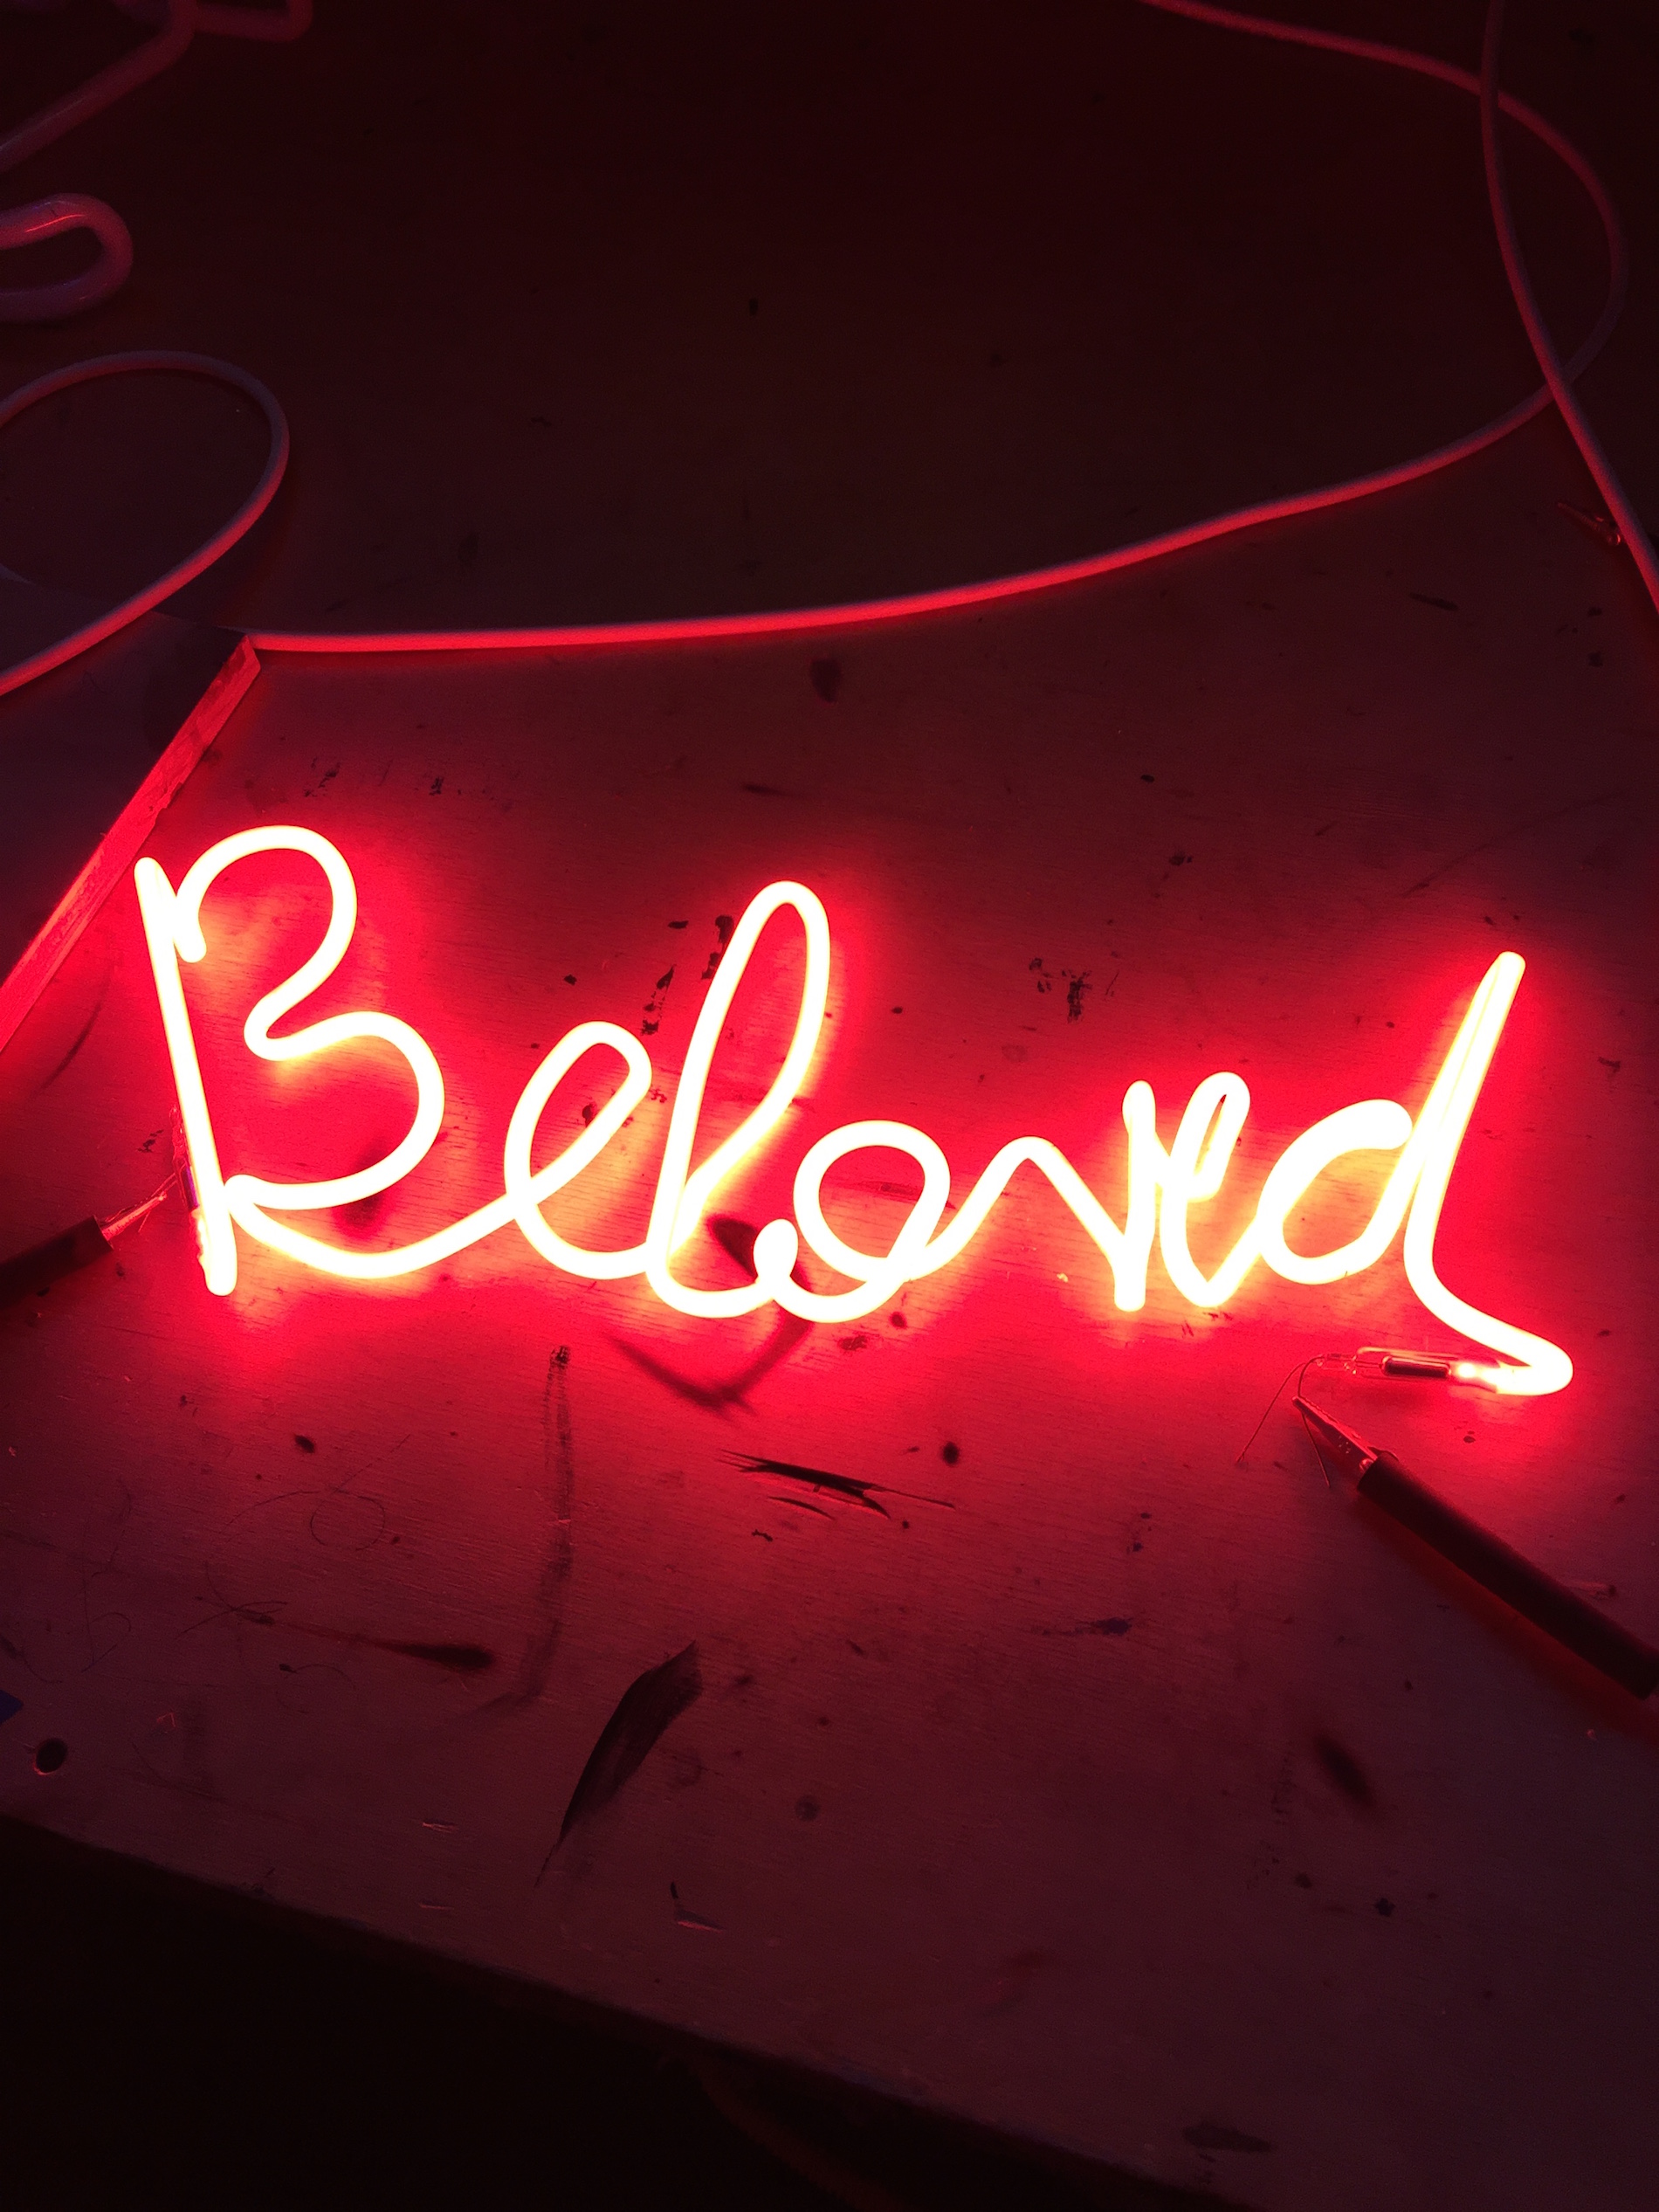 neon light depicts word "beloved"